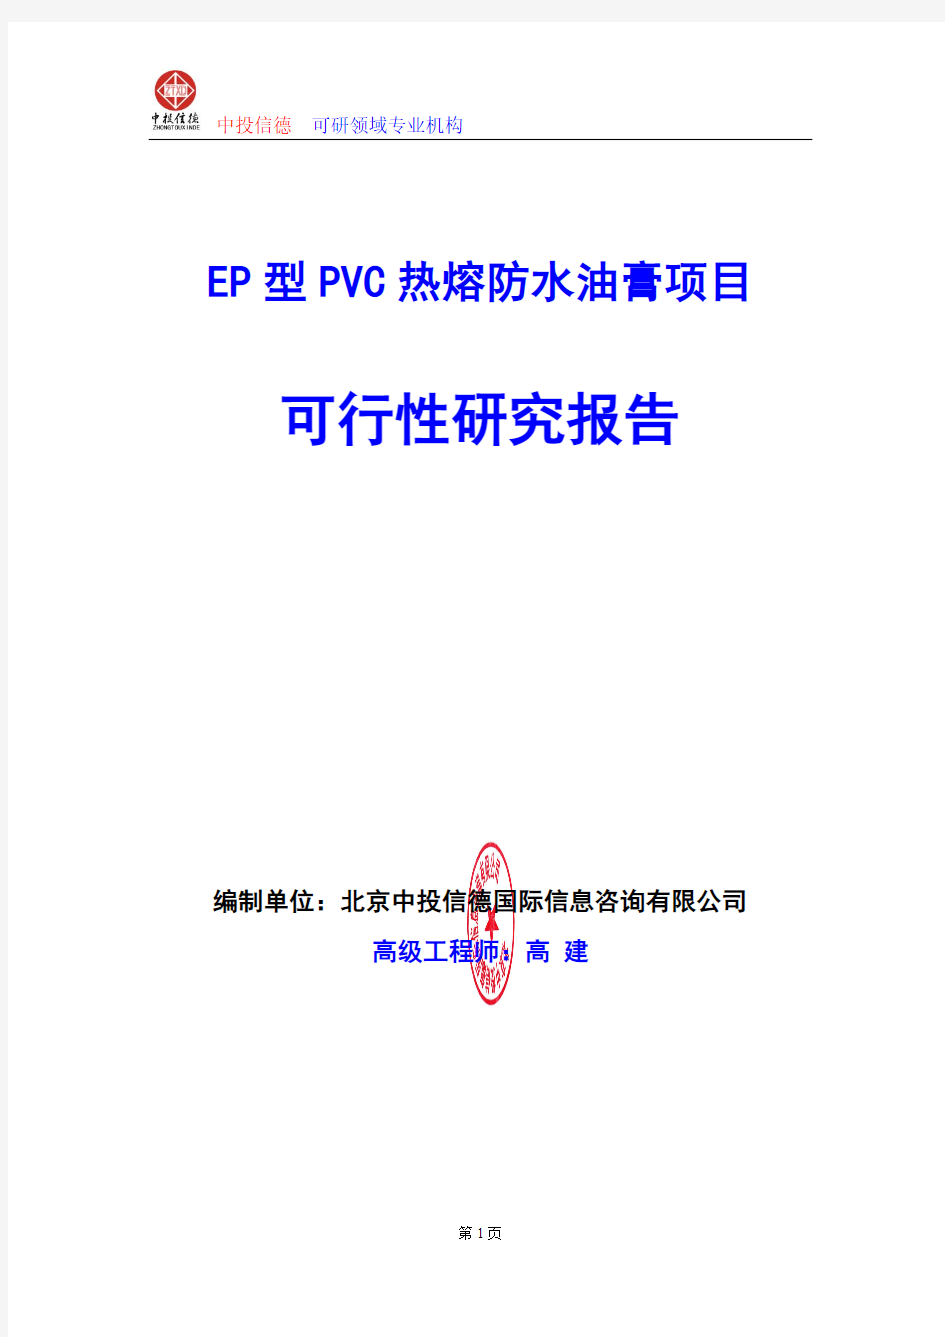 EP型PVC热熔防水油膏项目可行性研究报告编制格式说明(模板型word)